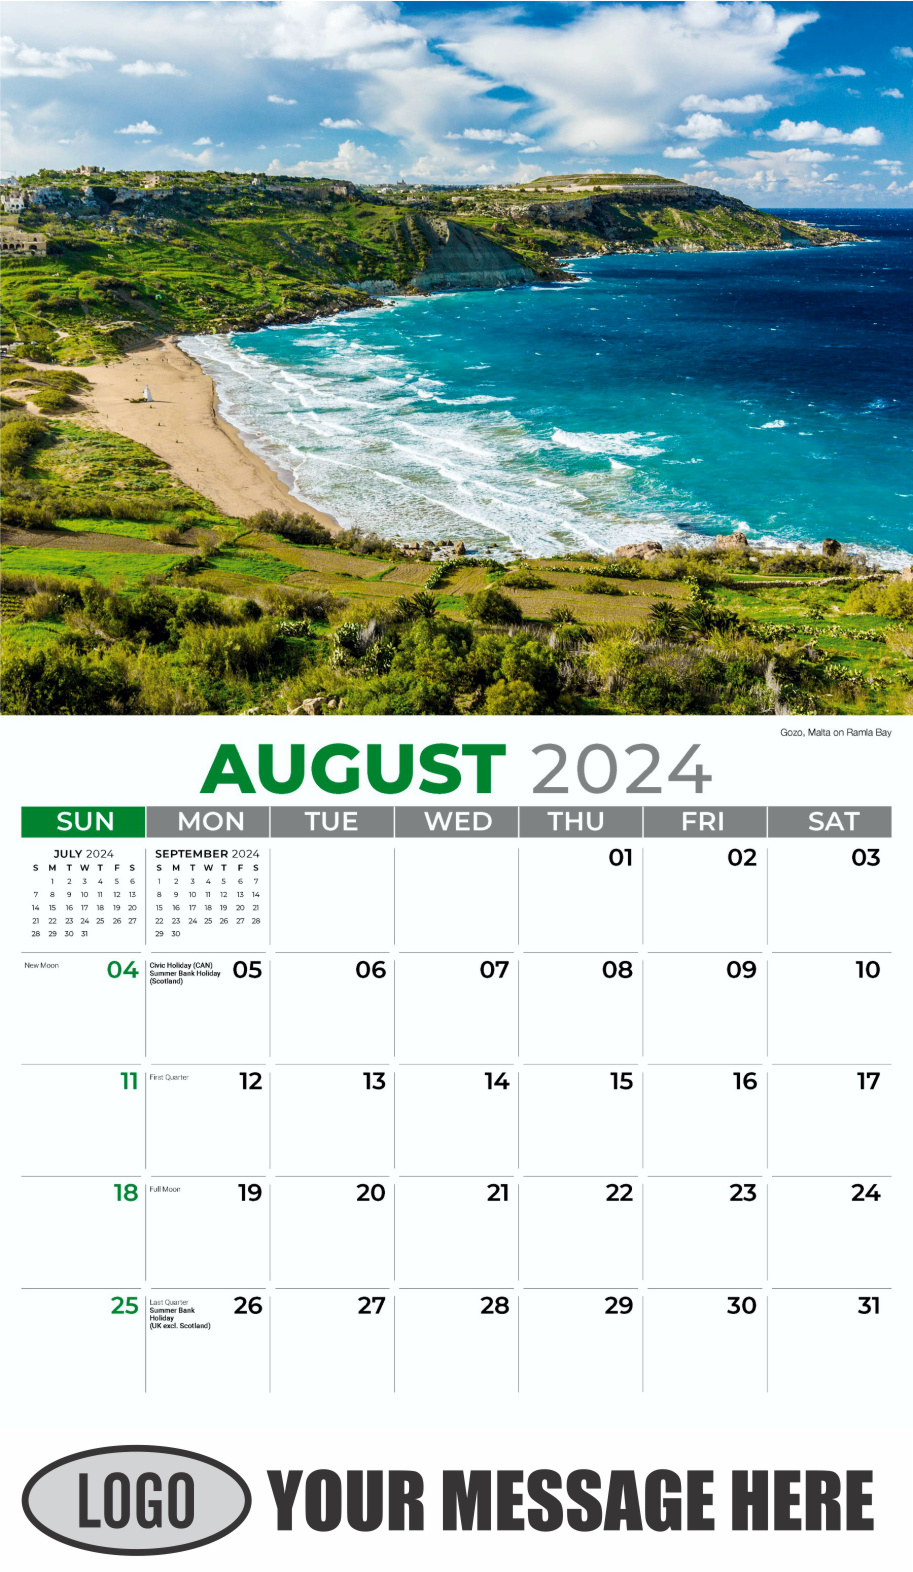 Sun, Sand and Surf 2024 Business Advertsing Wall Calendar - August